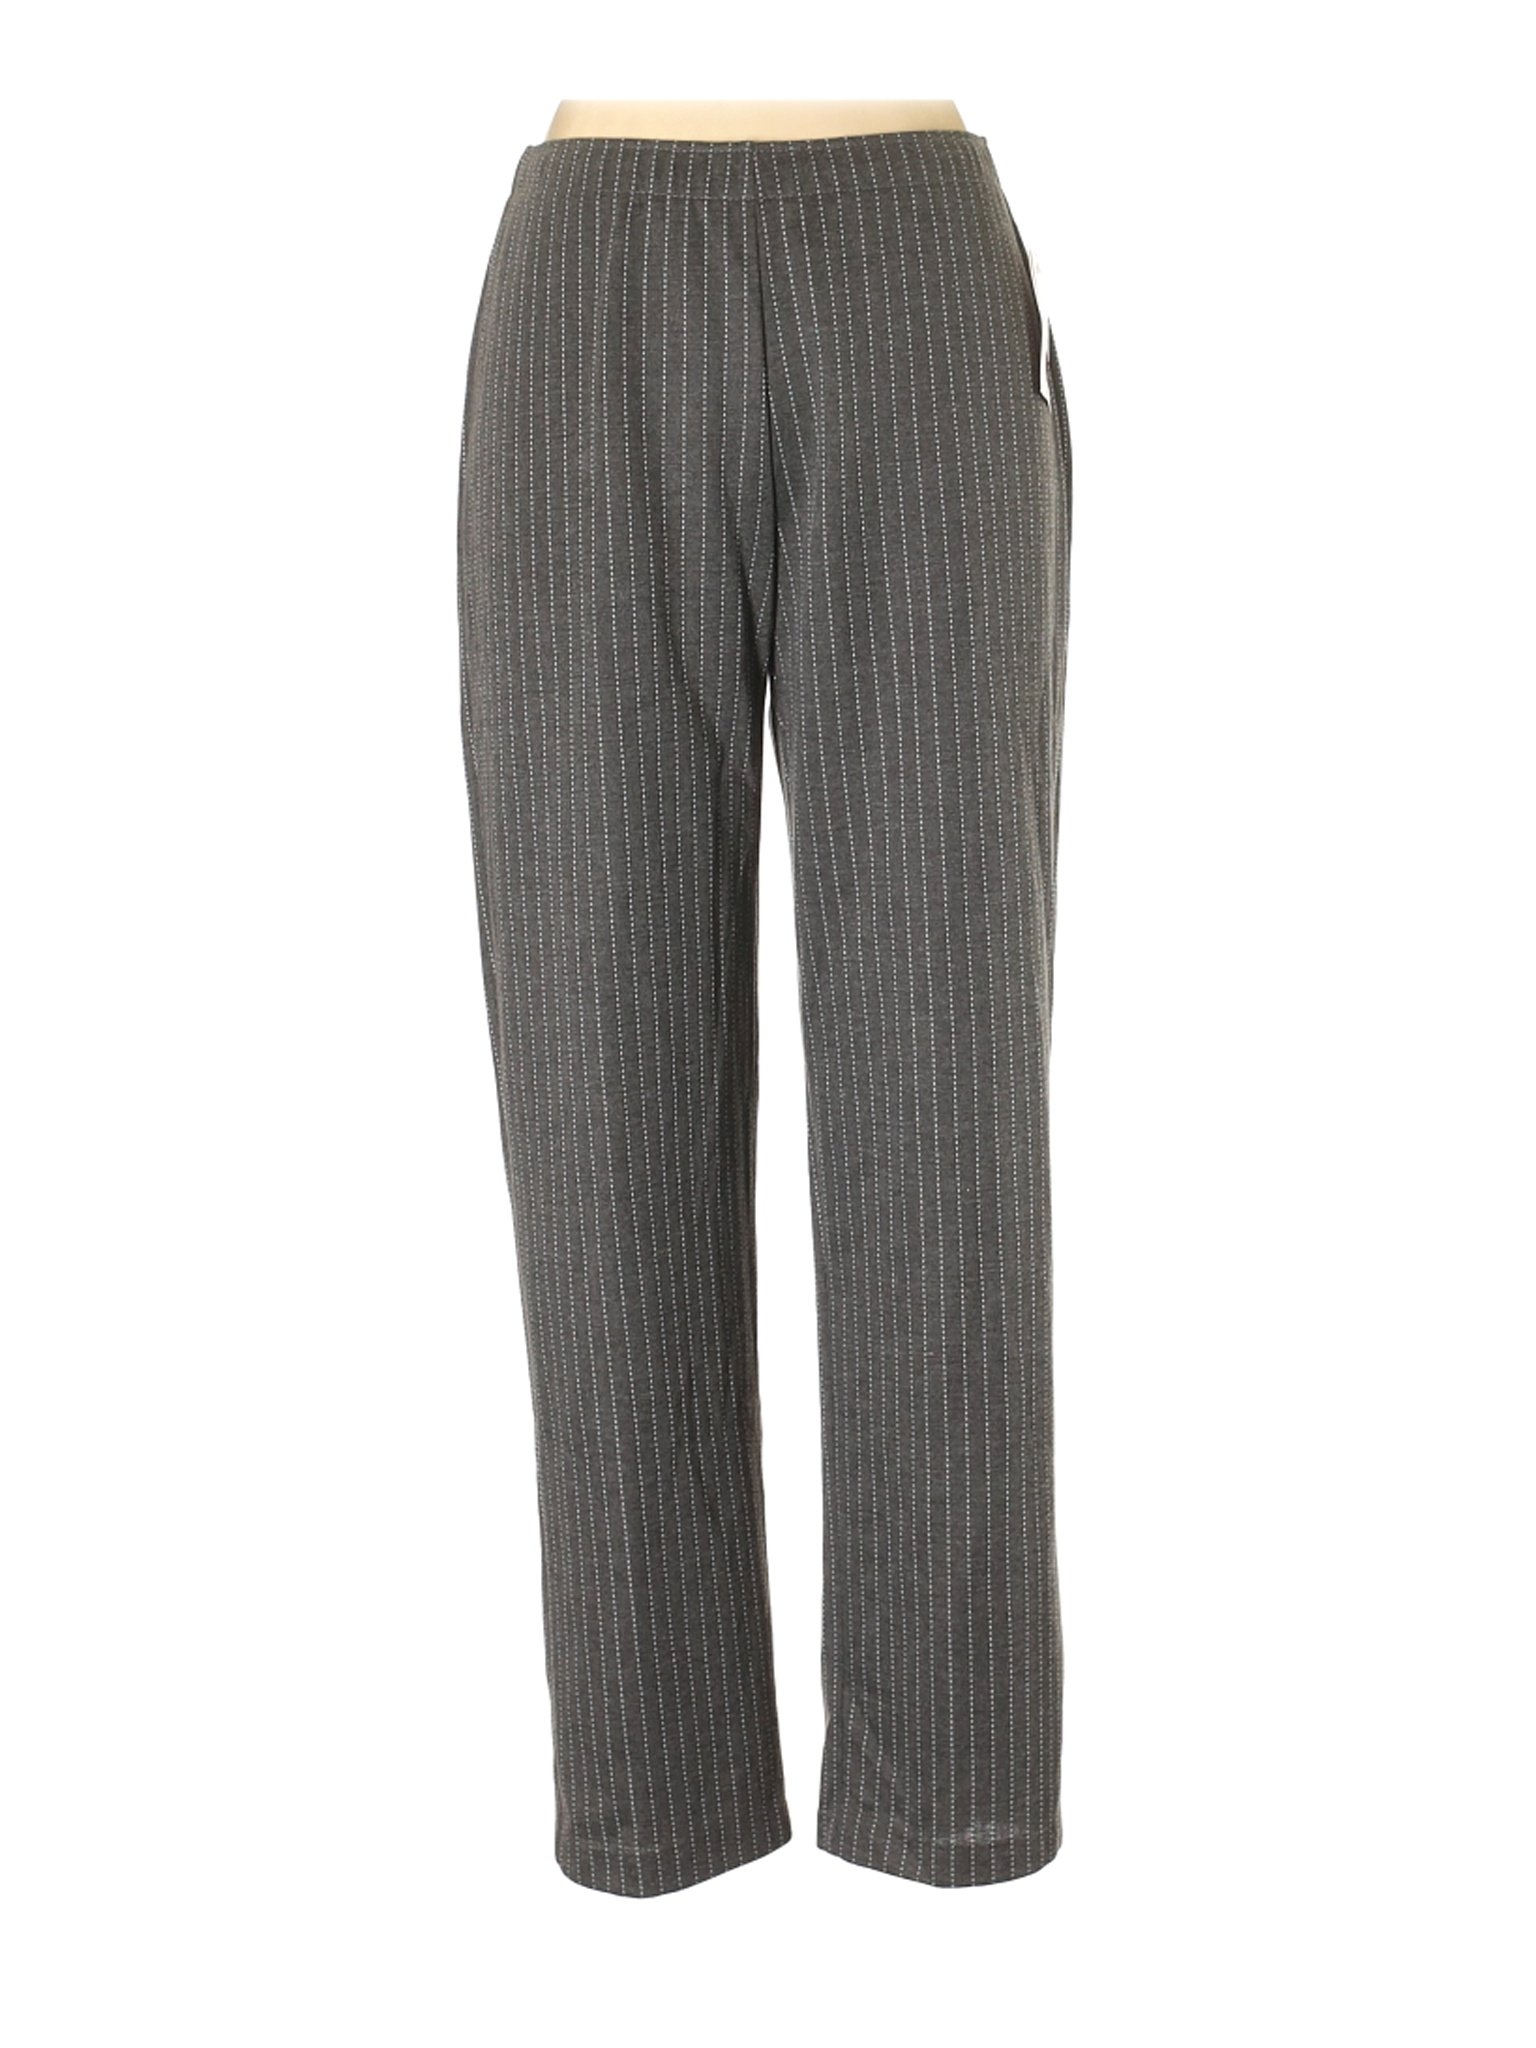 NWT Cathy Daniels Women Gray Casual Pants L | eBay